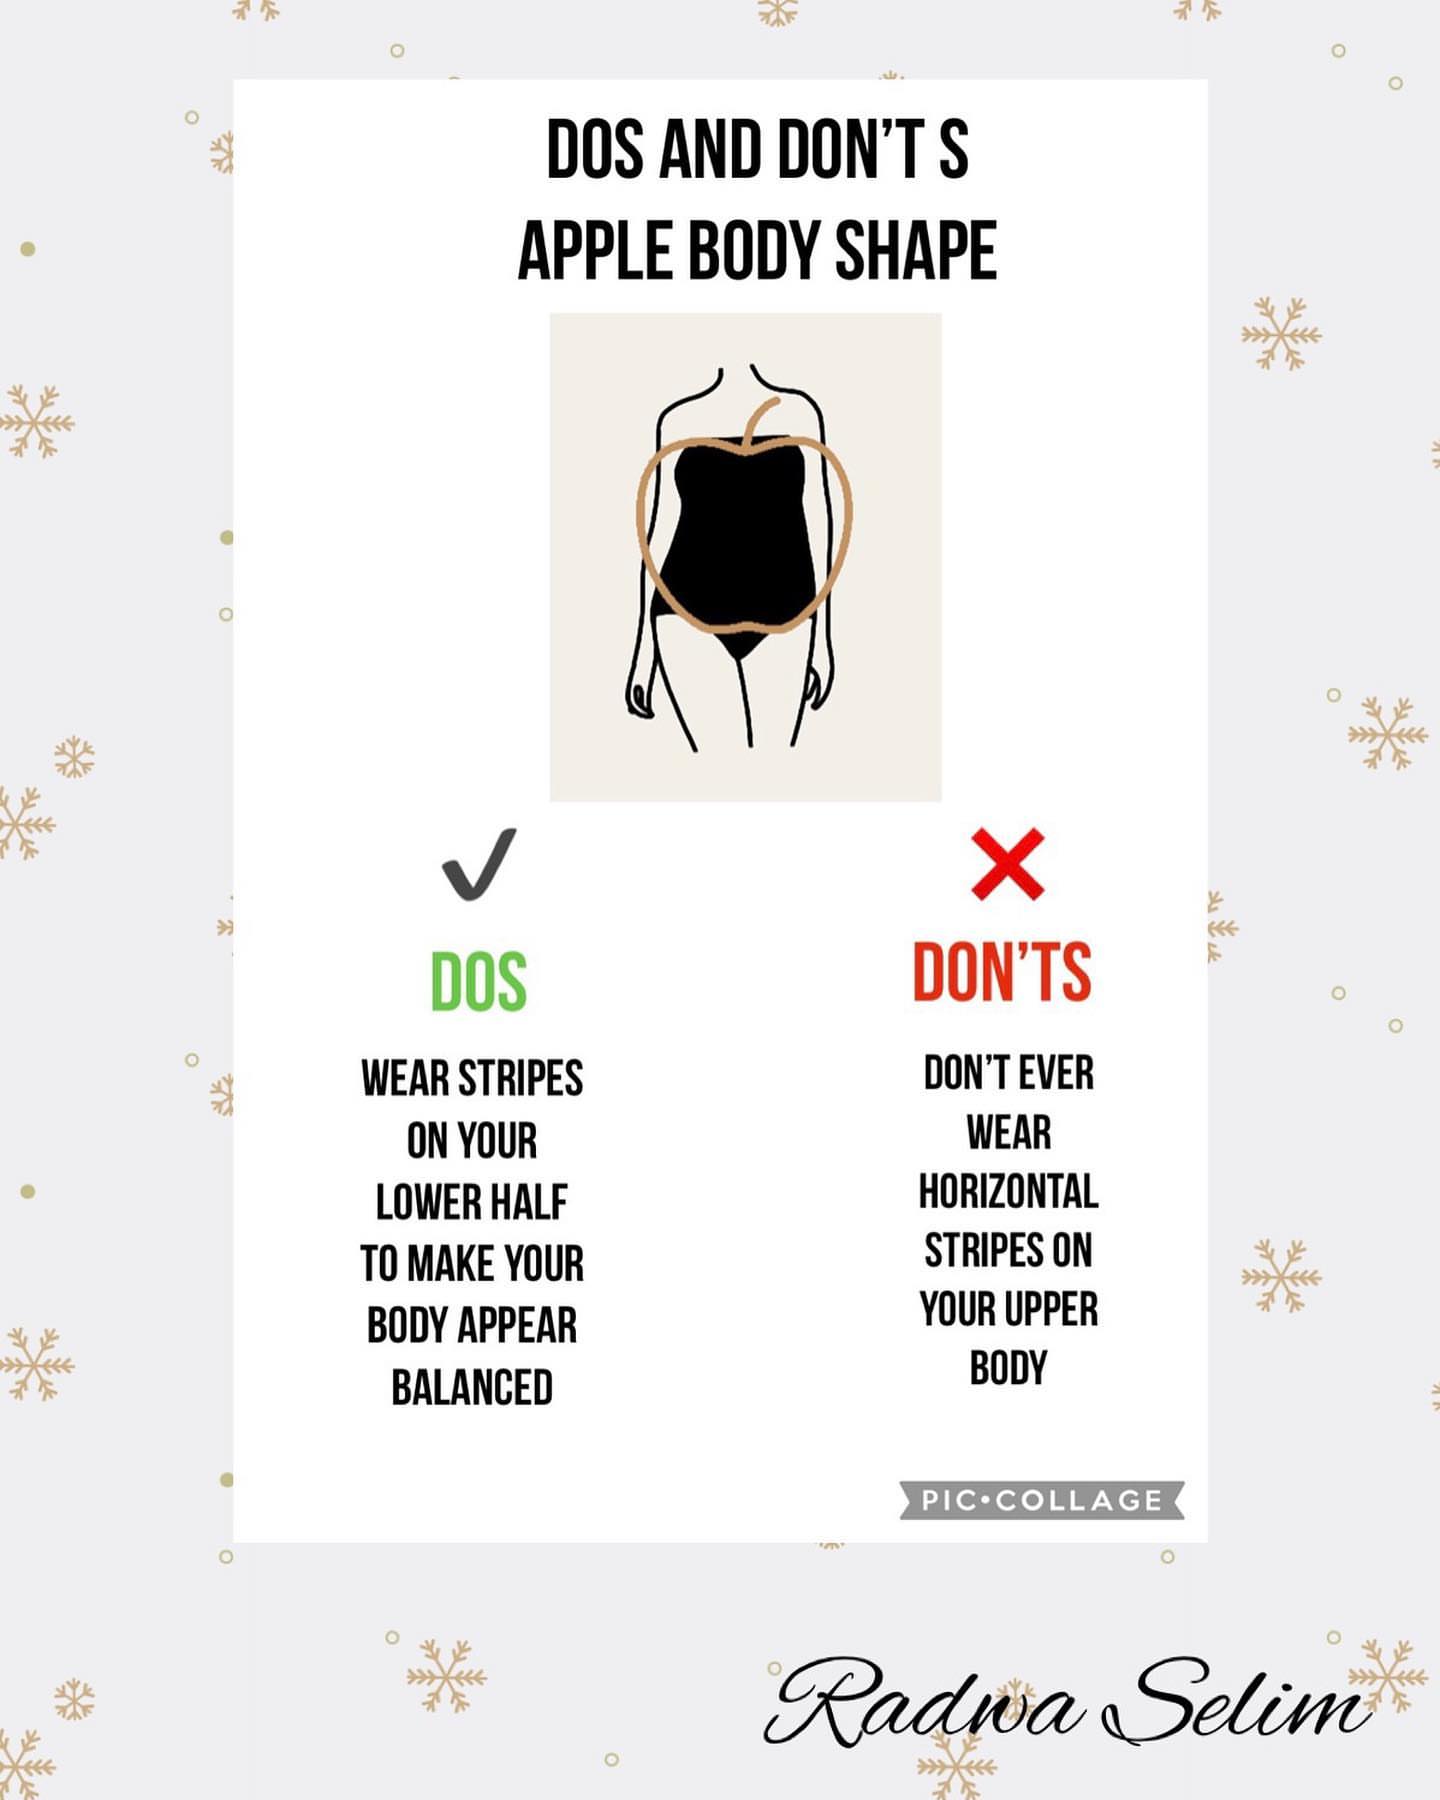 What not to wear on an Apple Body Shape